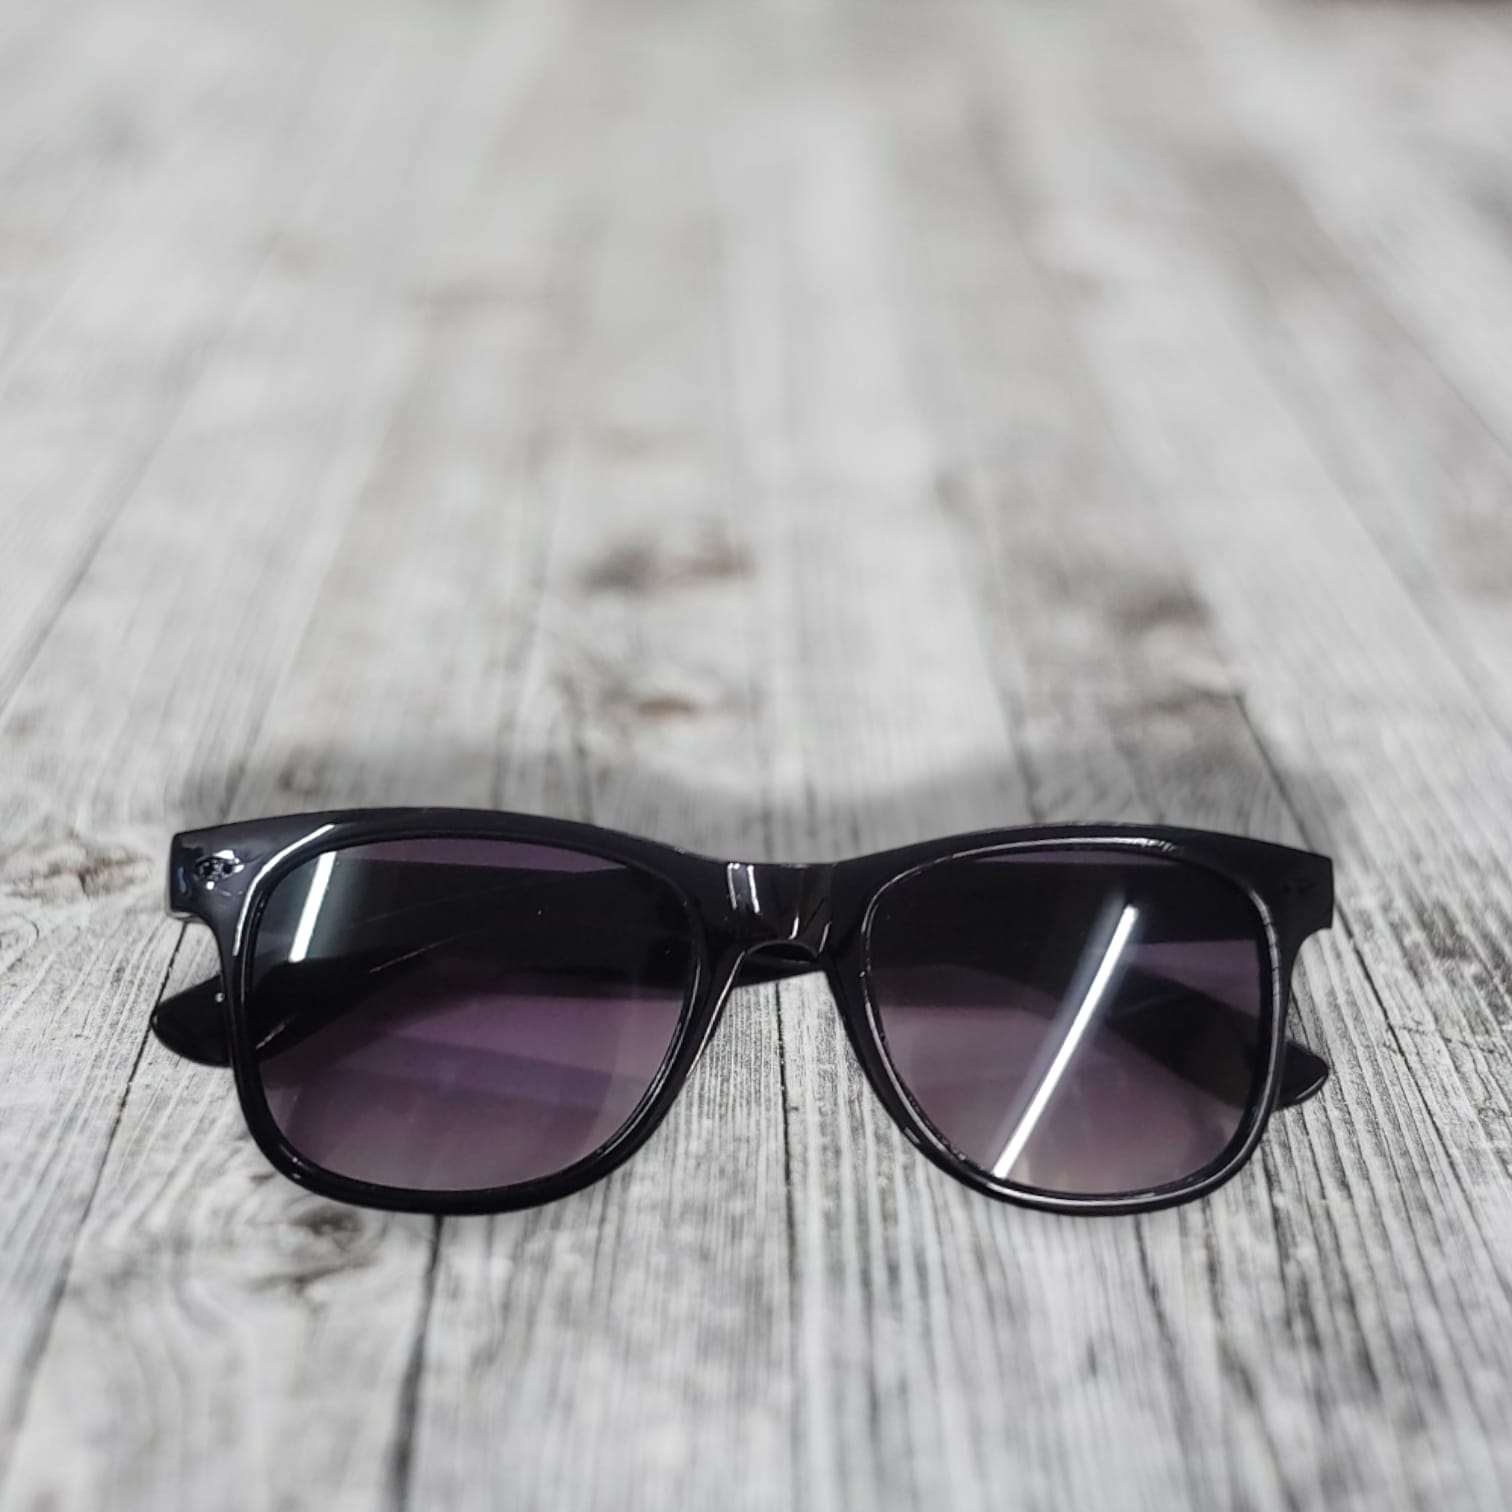  Sunglasses For Men And Women